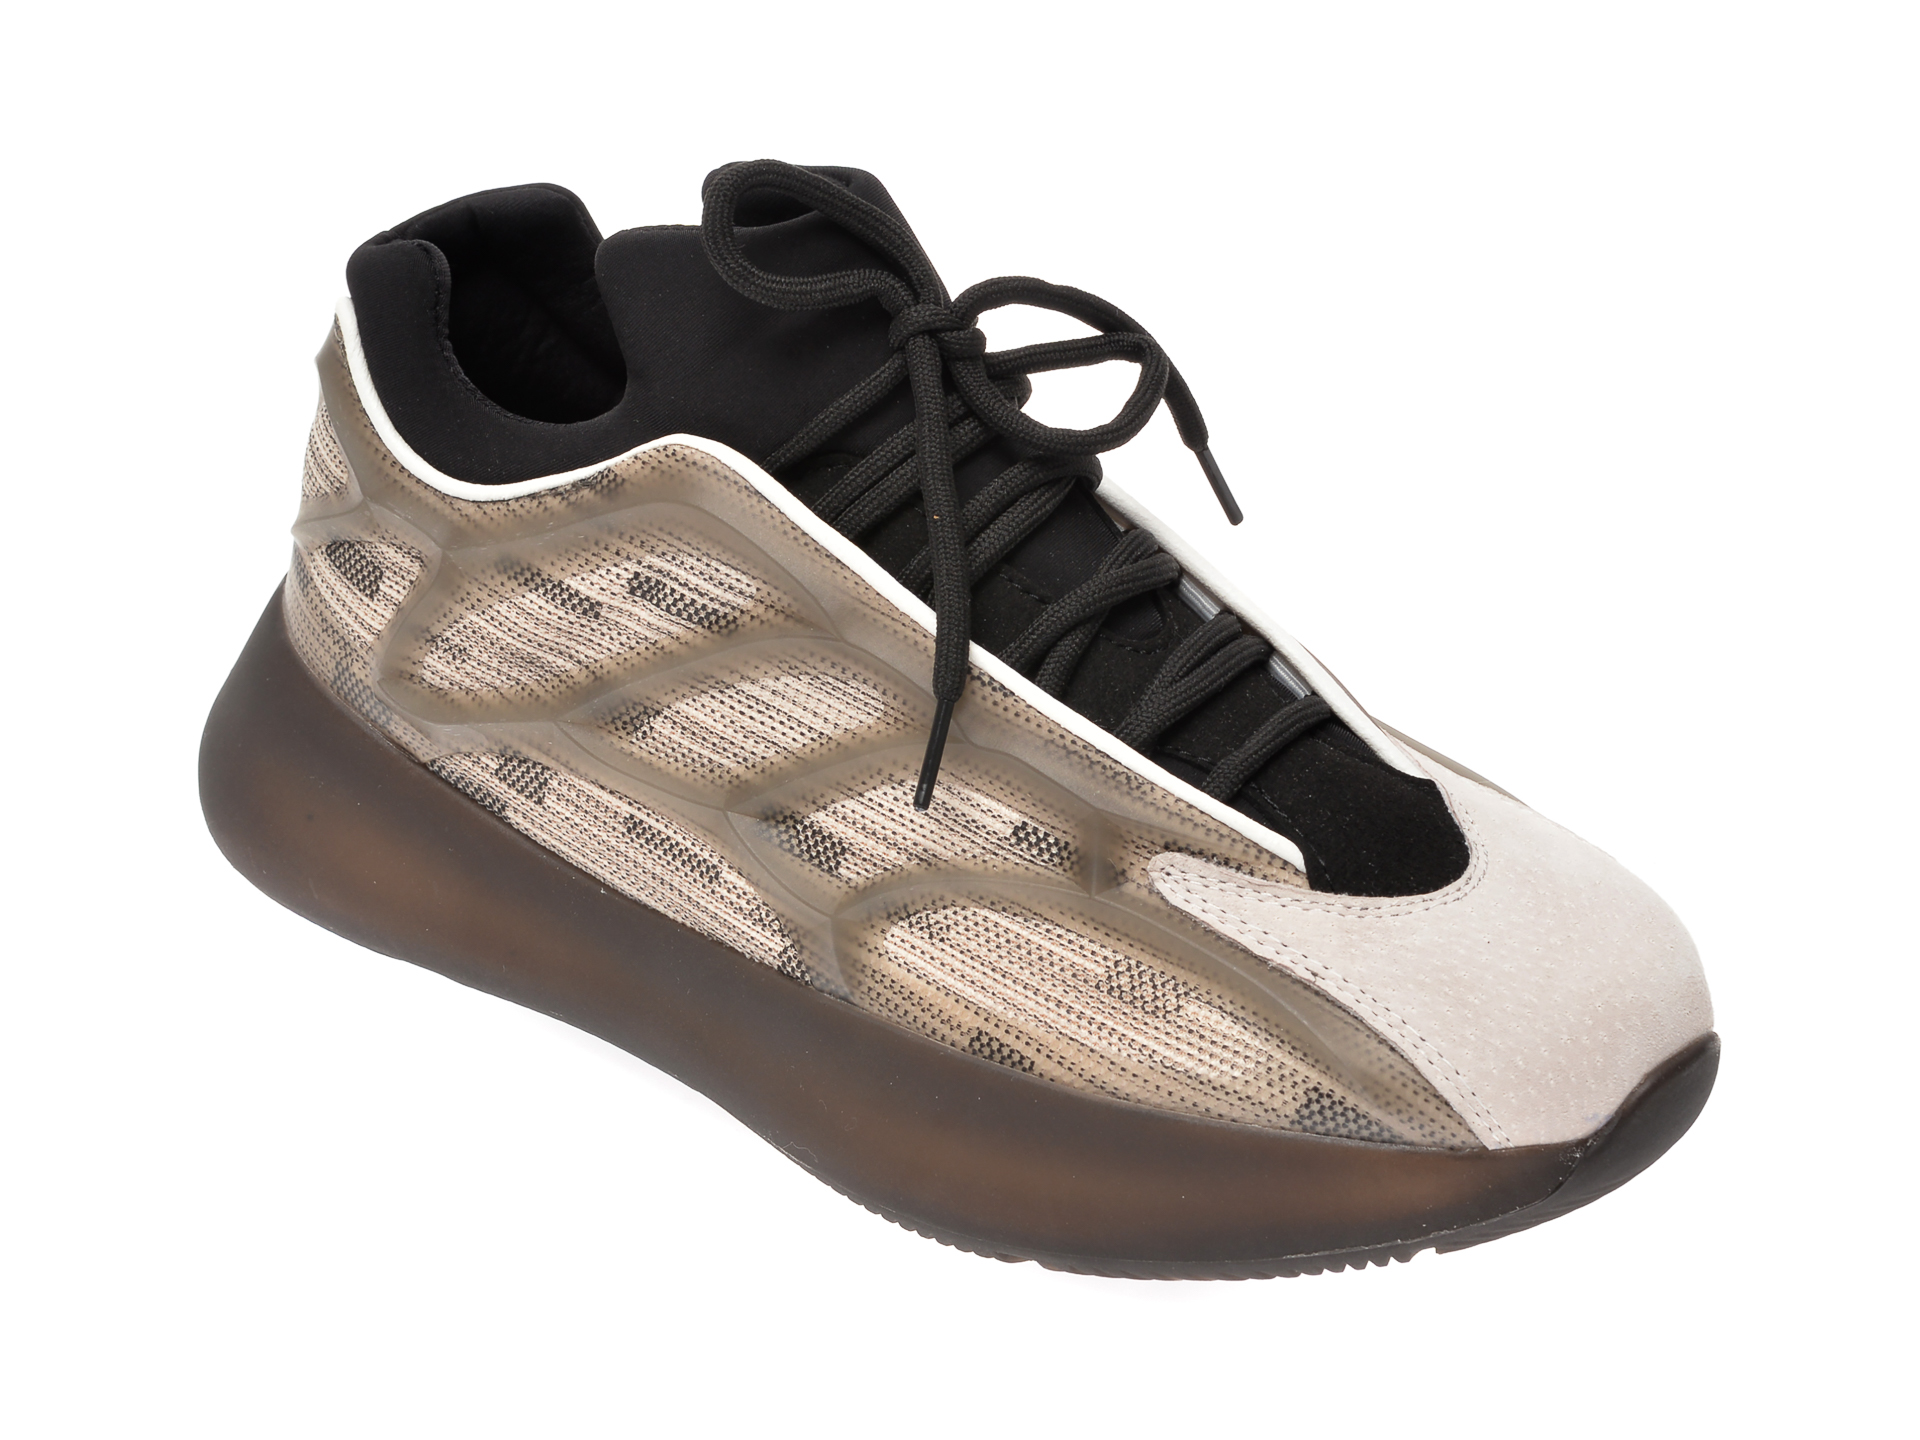 Pantofi sport BITE THE BULLET gri, 1010, din material textil si piele naturala